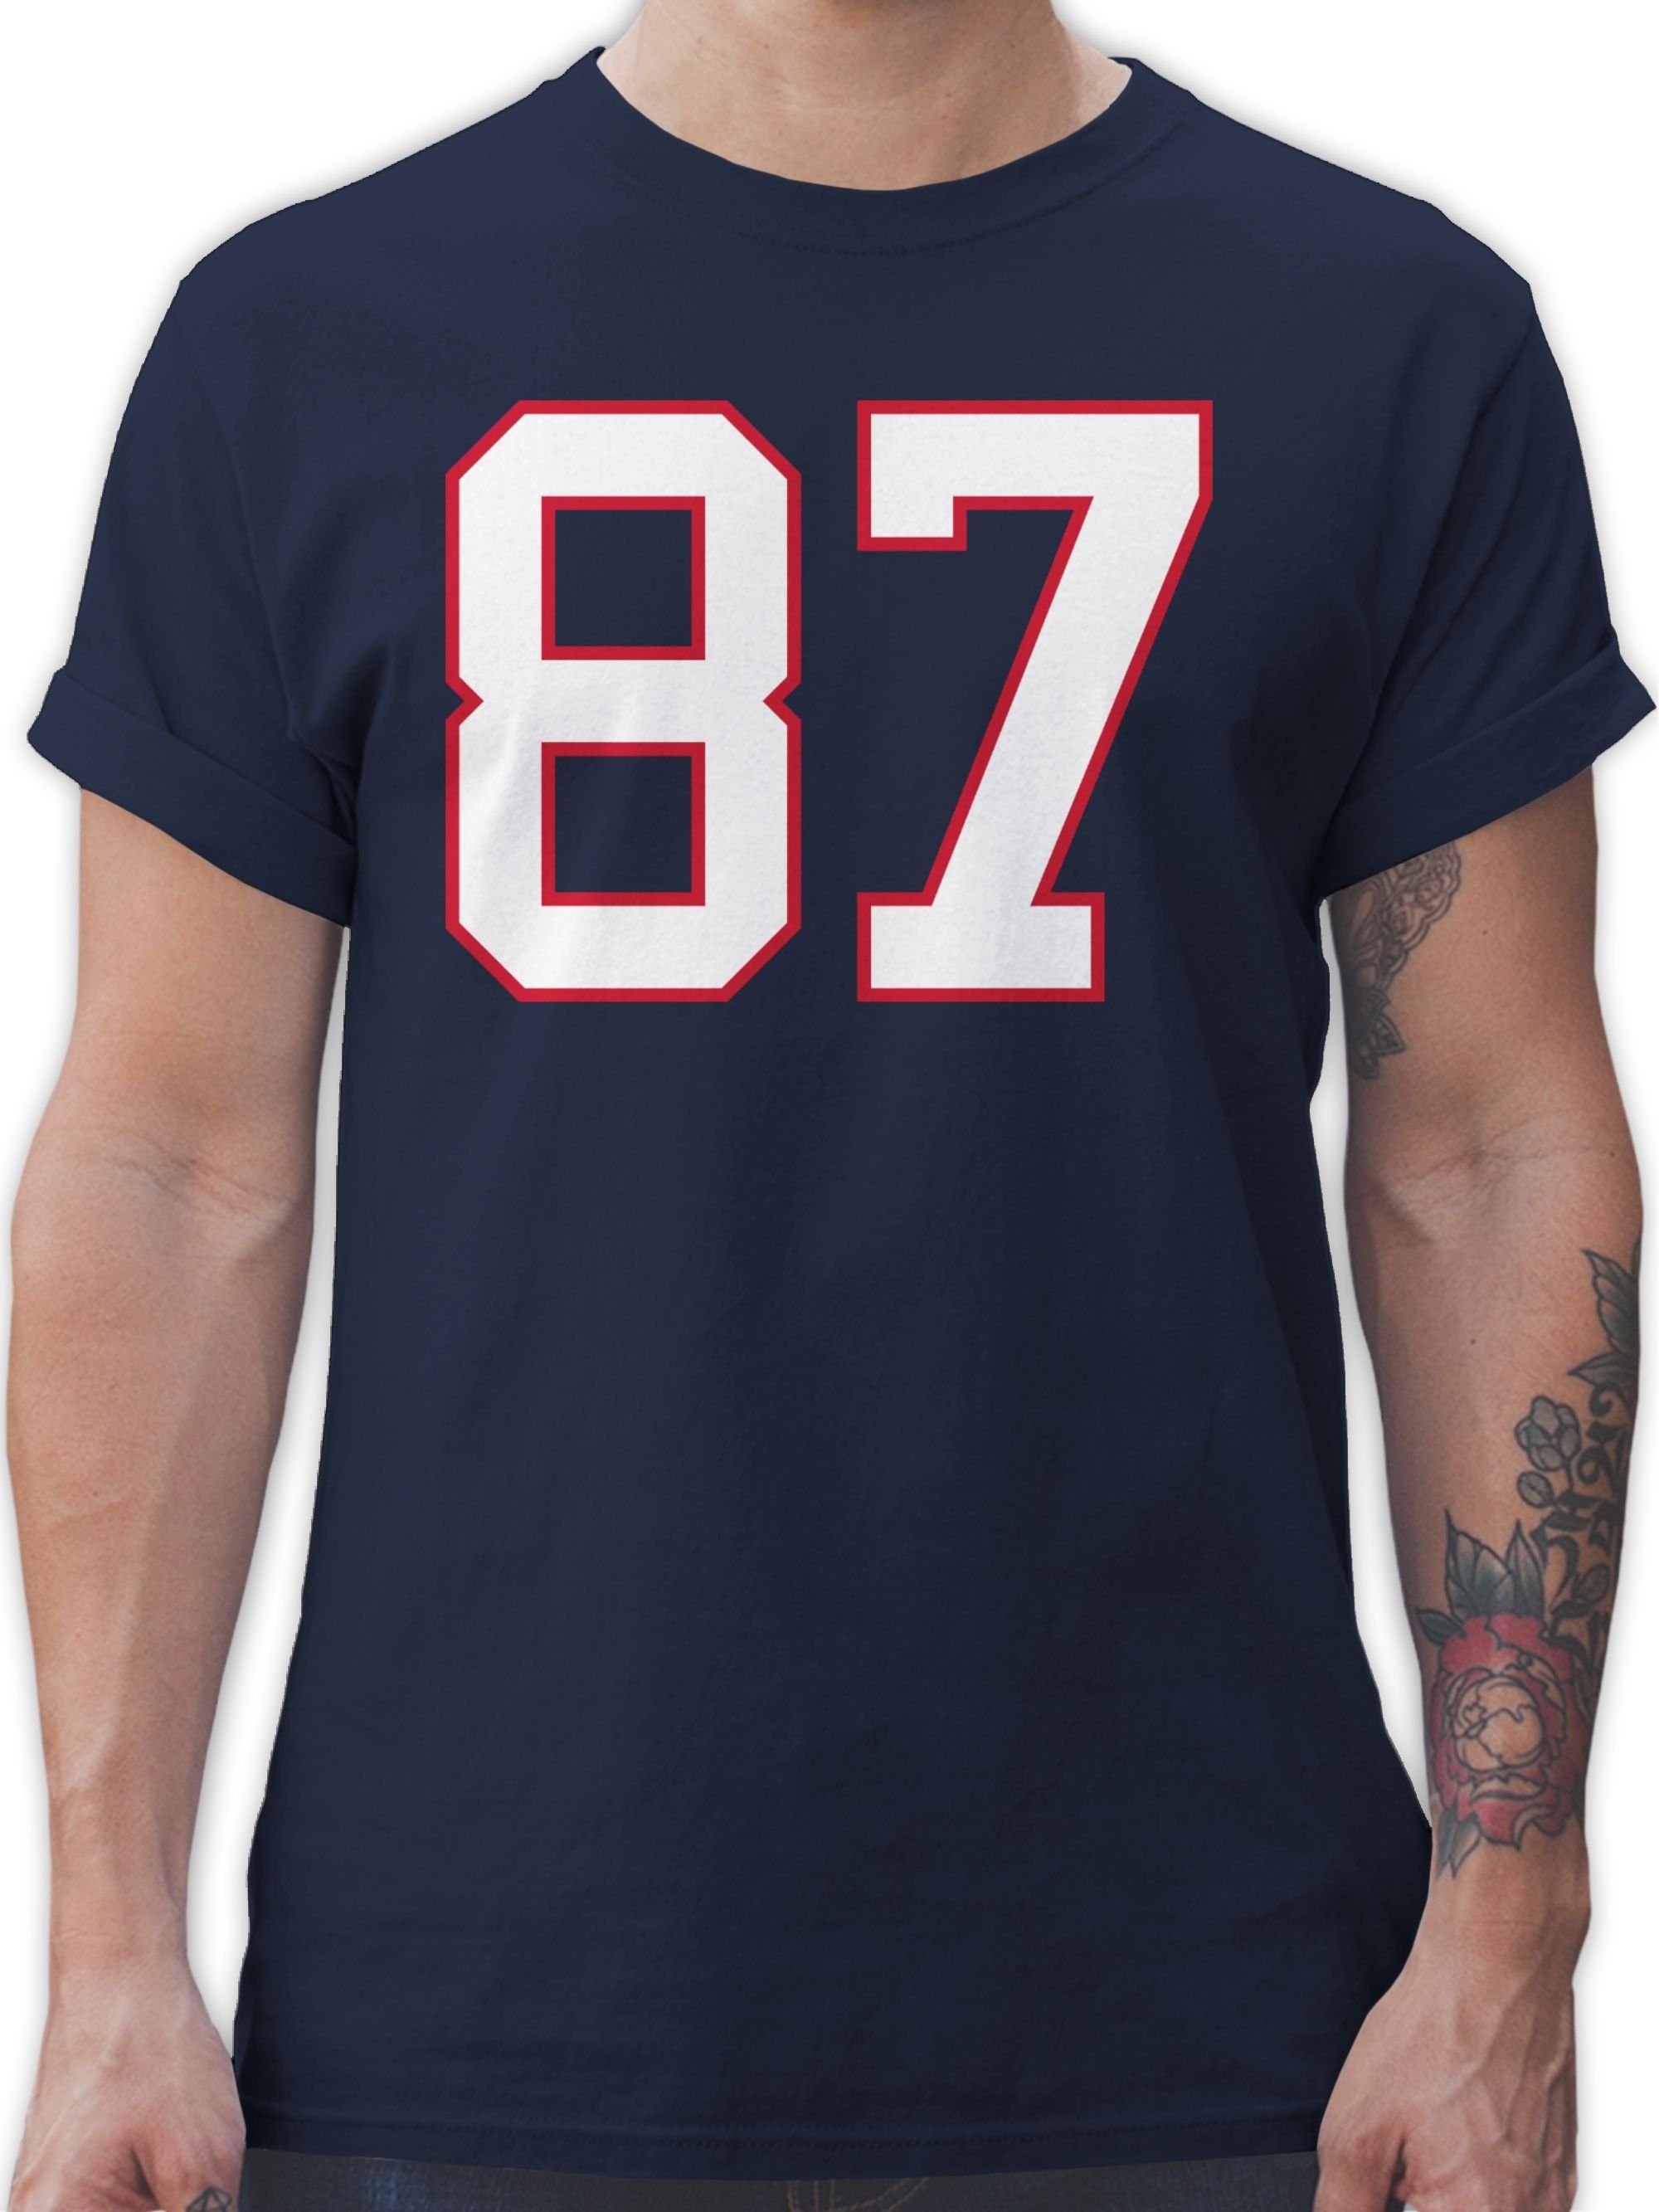 Shirtracer T-Shirt Football New England 87 American Football NFL 2 Navy Blau